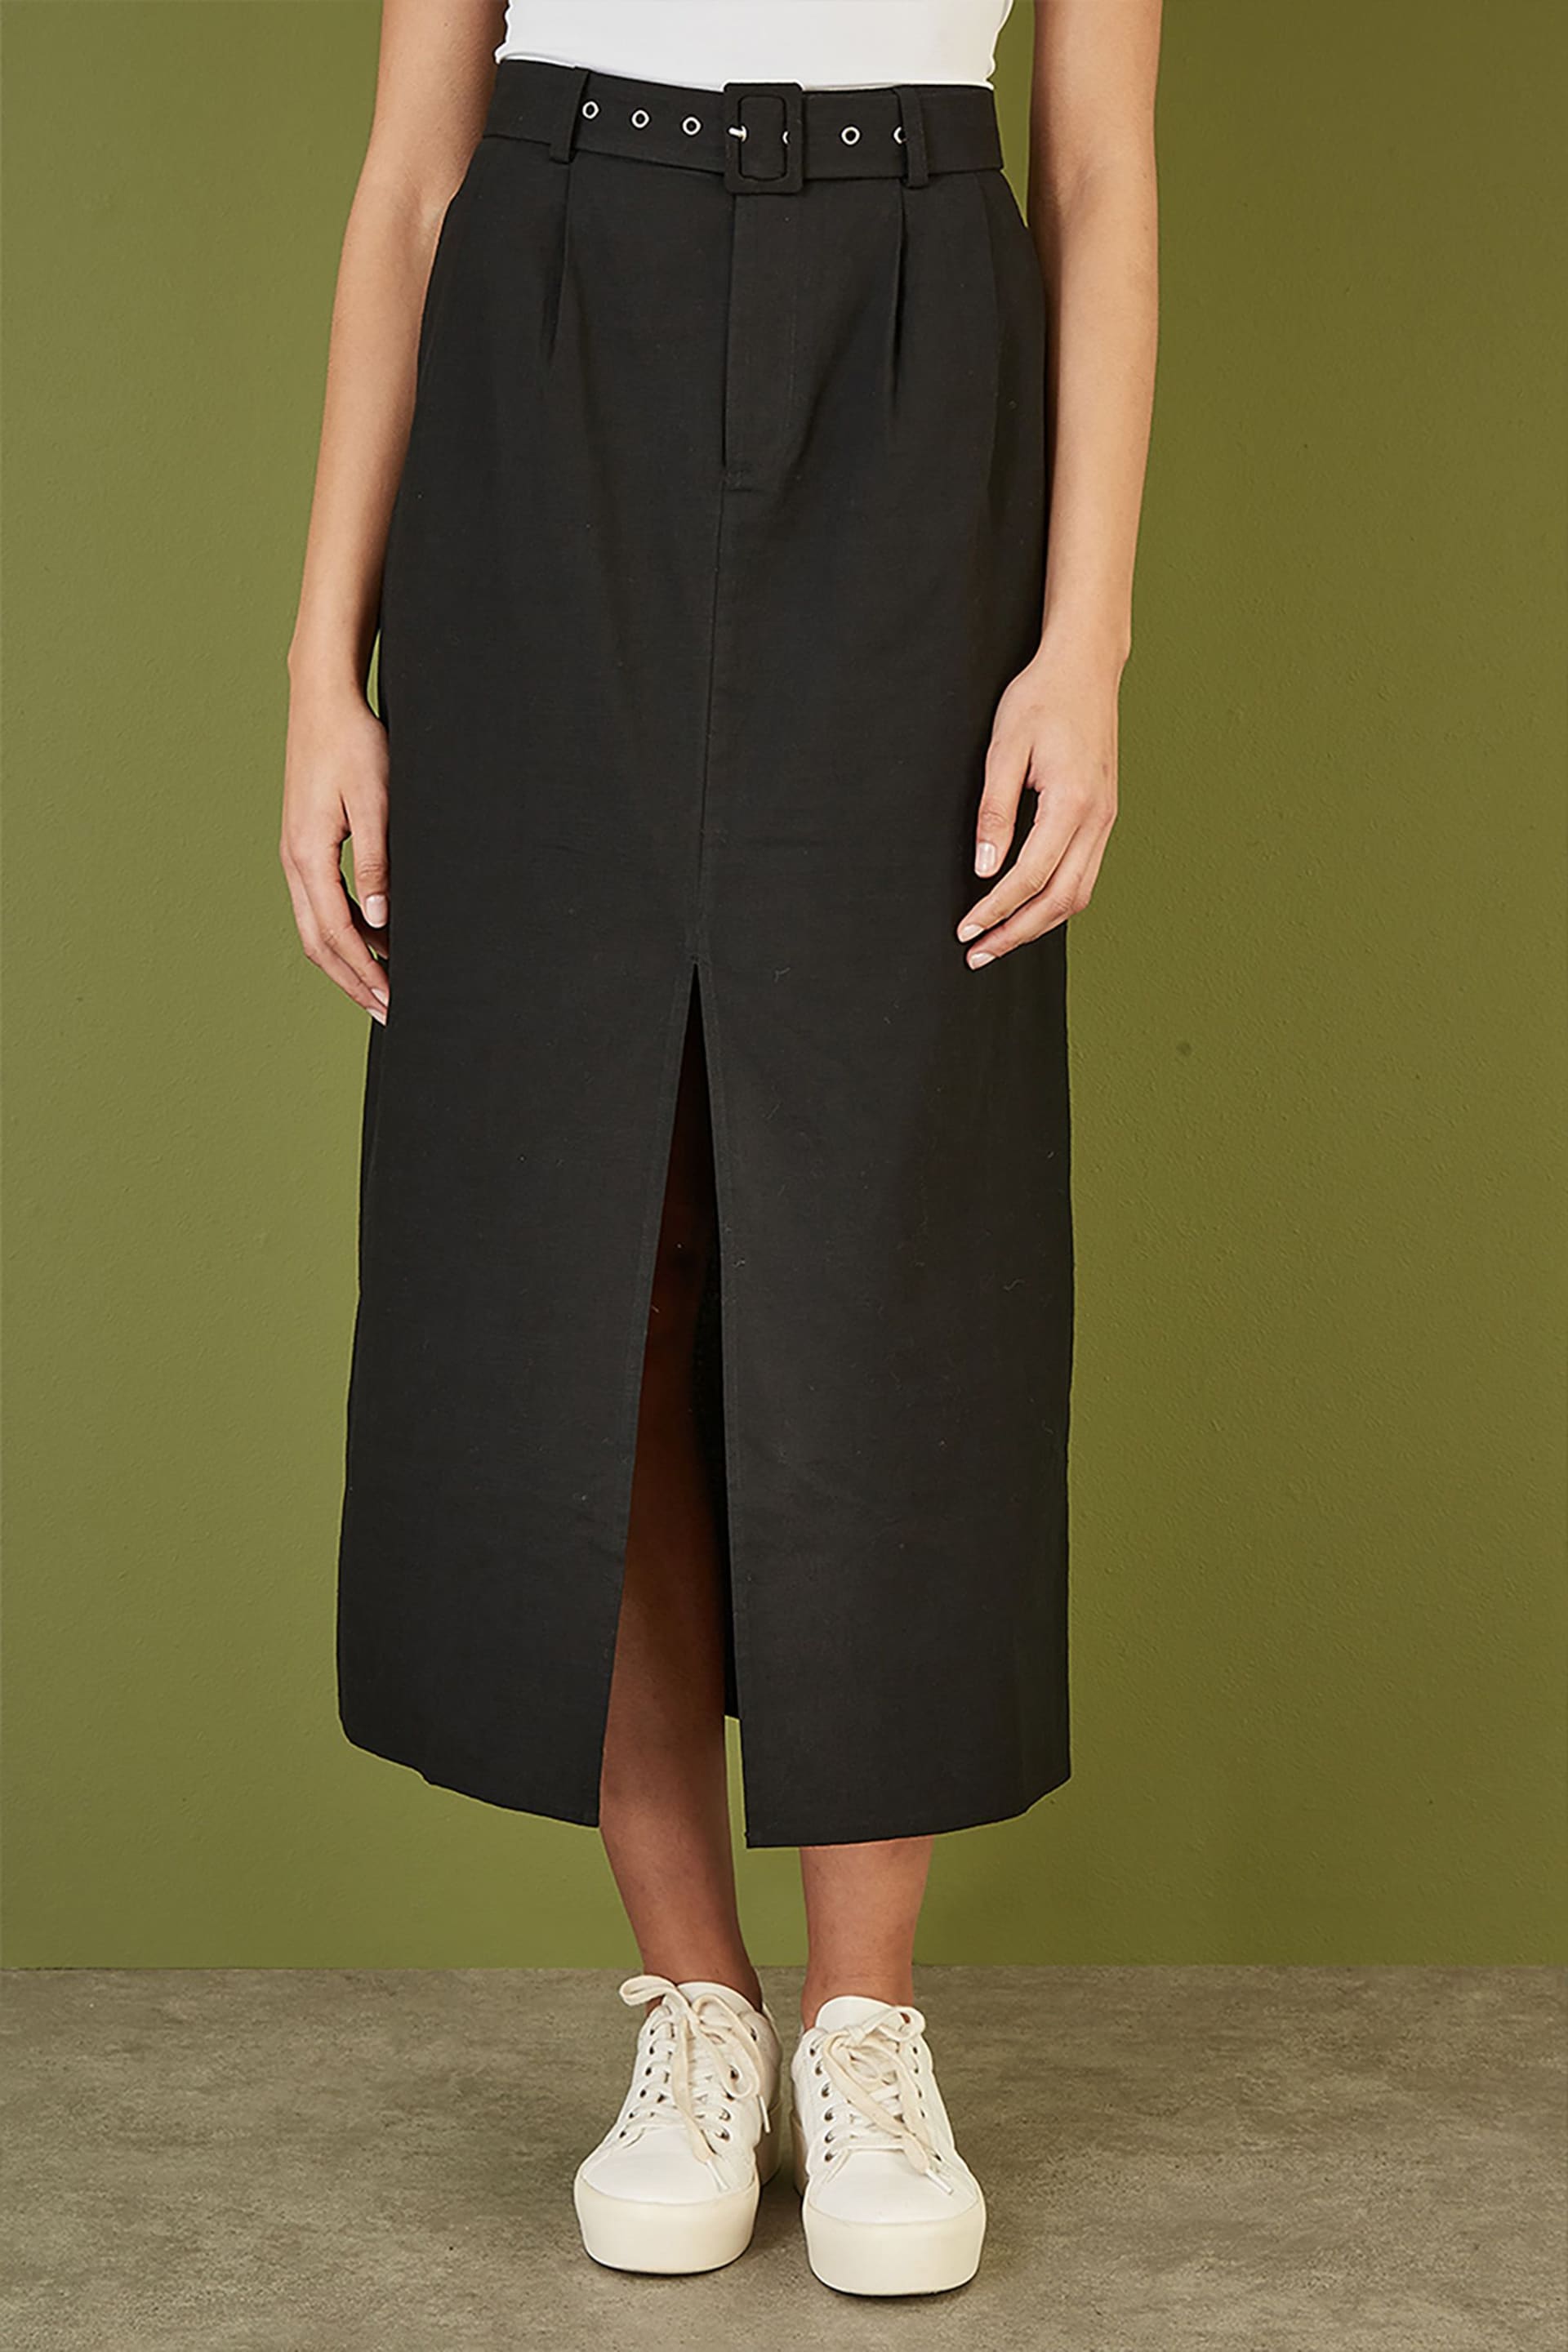 Yumi Black Cotton Midi Skirt With Belt And Split Hem - Image 1 of 3